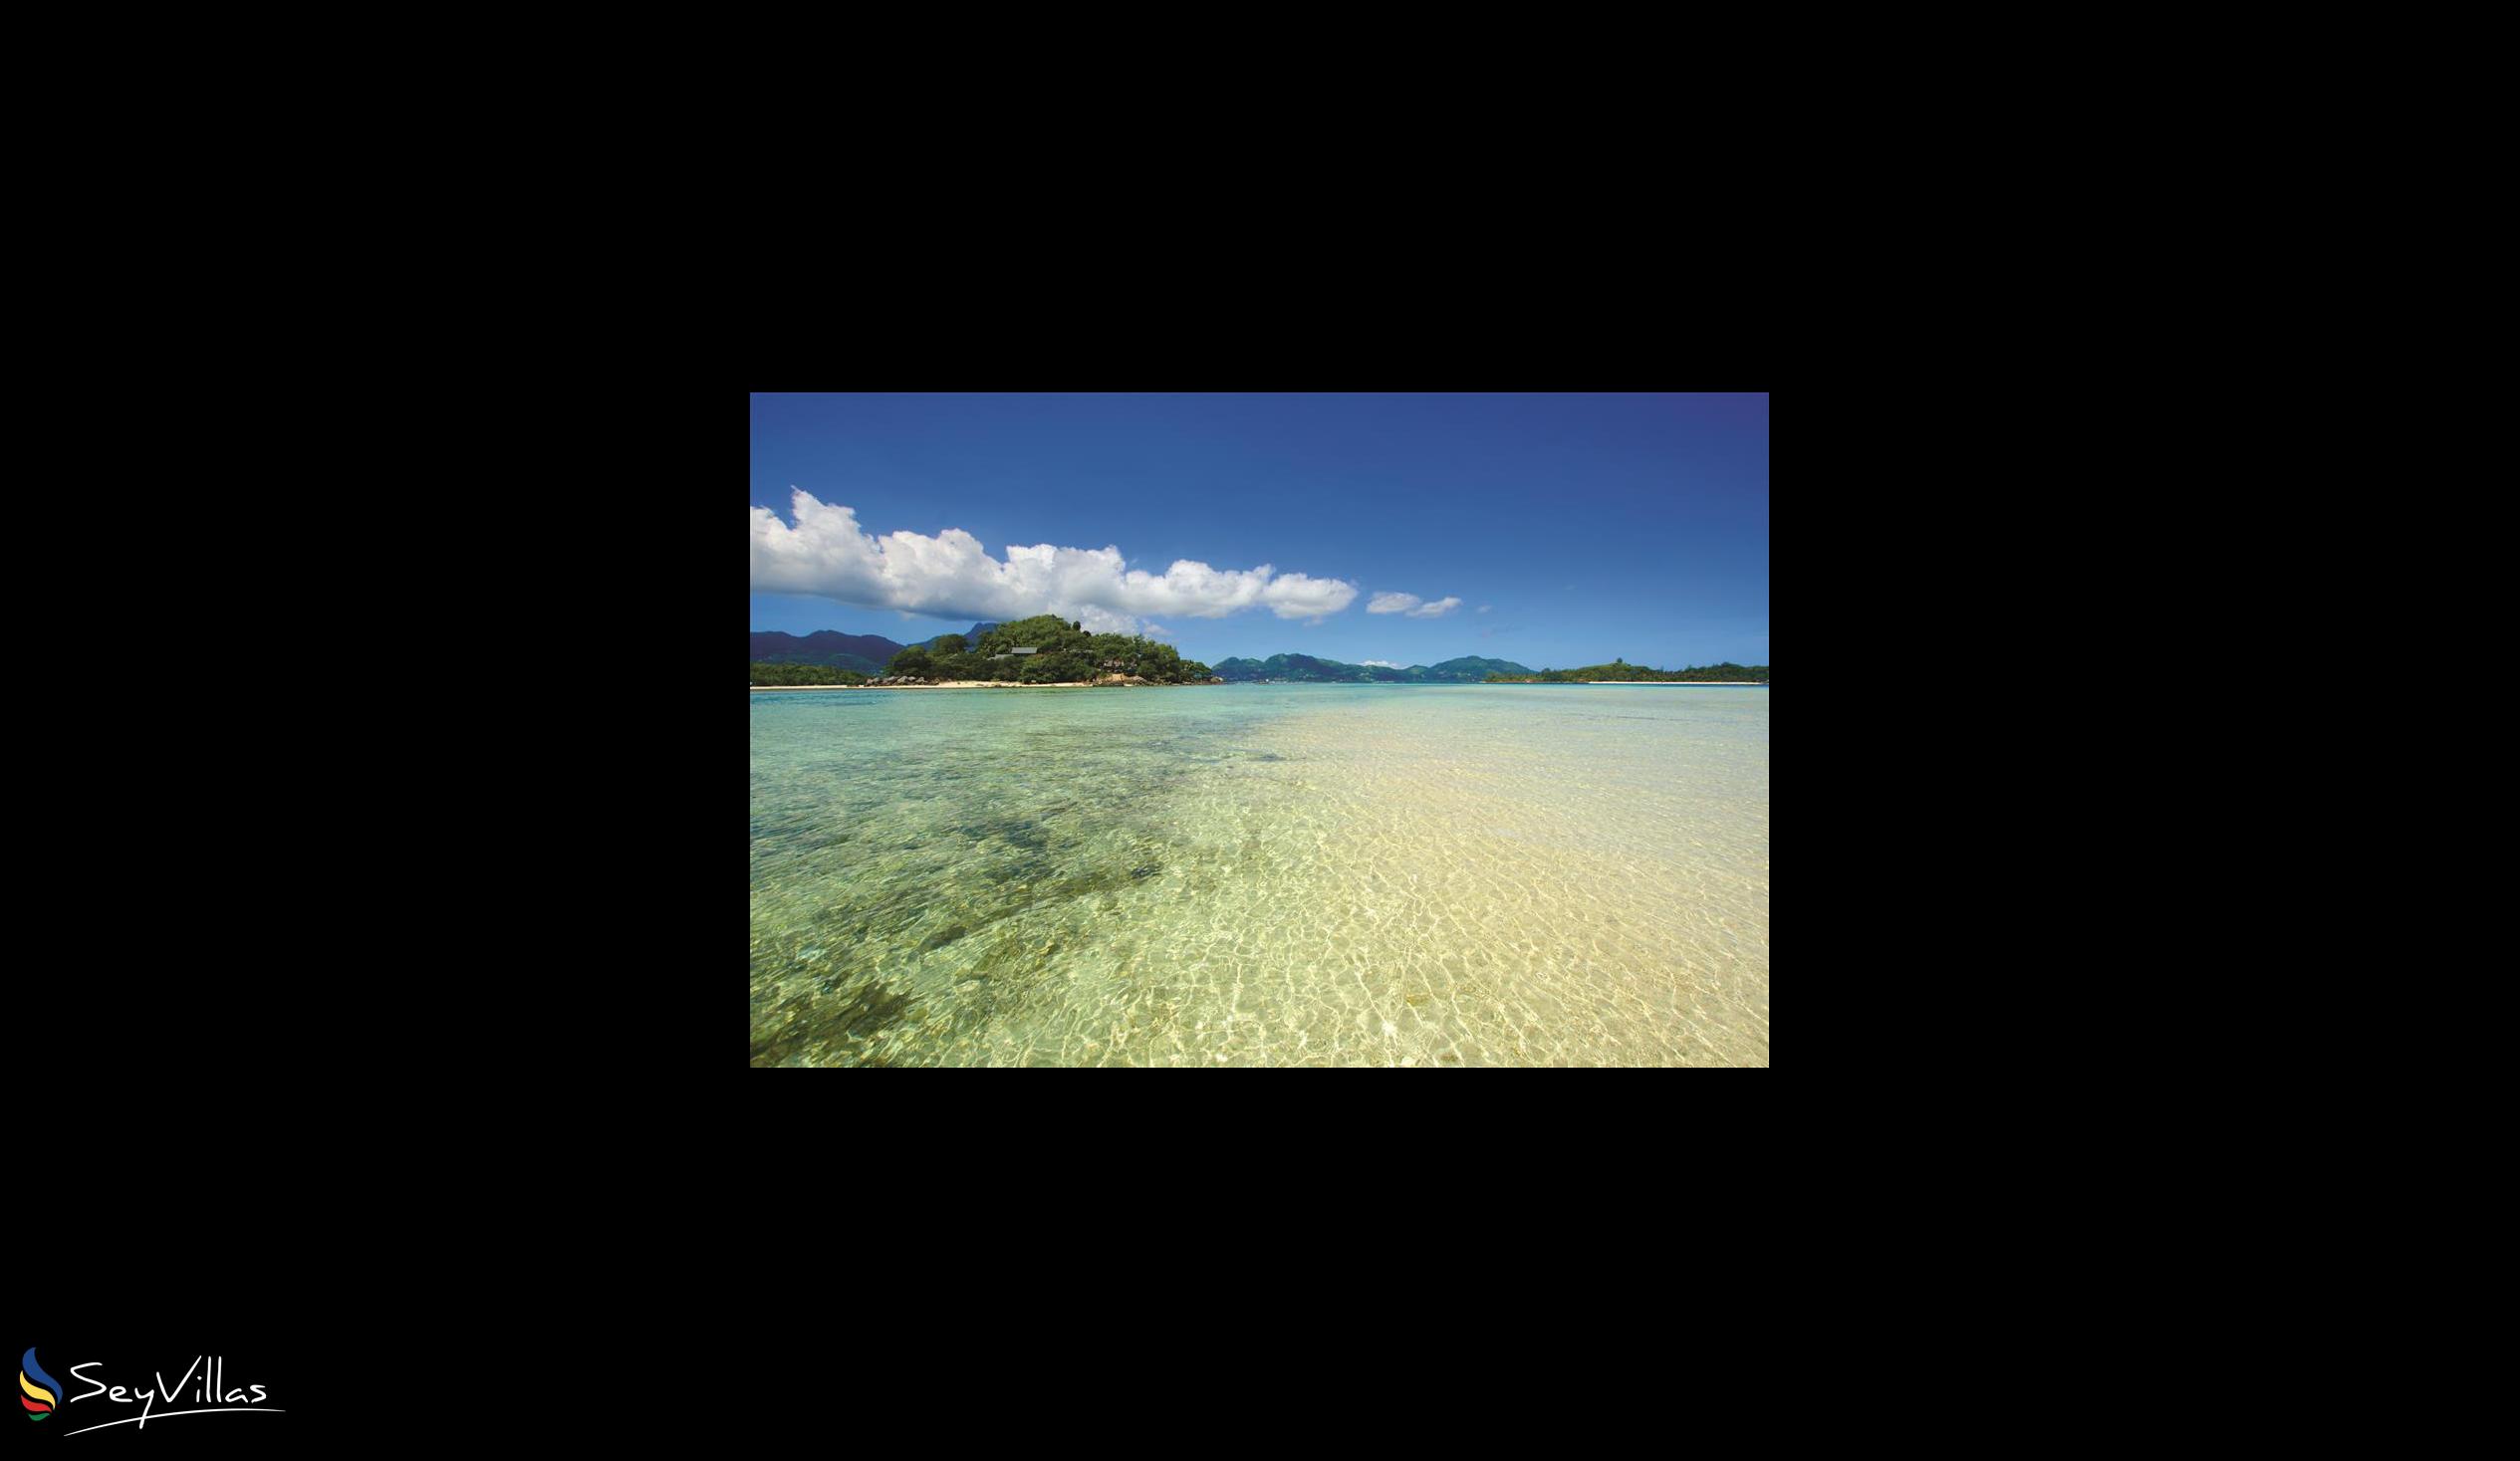 Photo 52: JA Enchanted Island Resort - Location - Round Island (Seychelles)